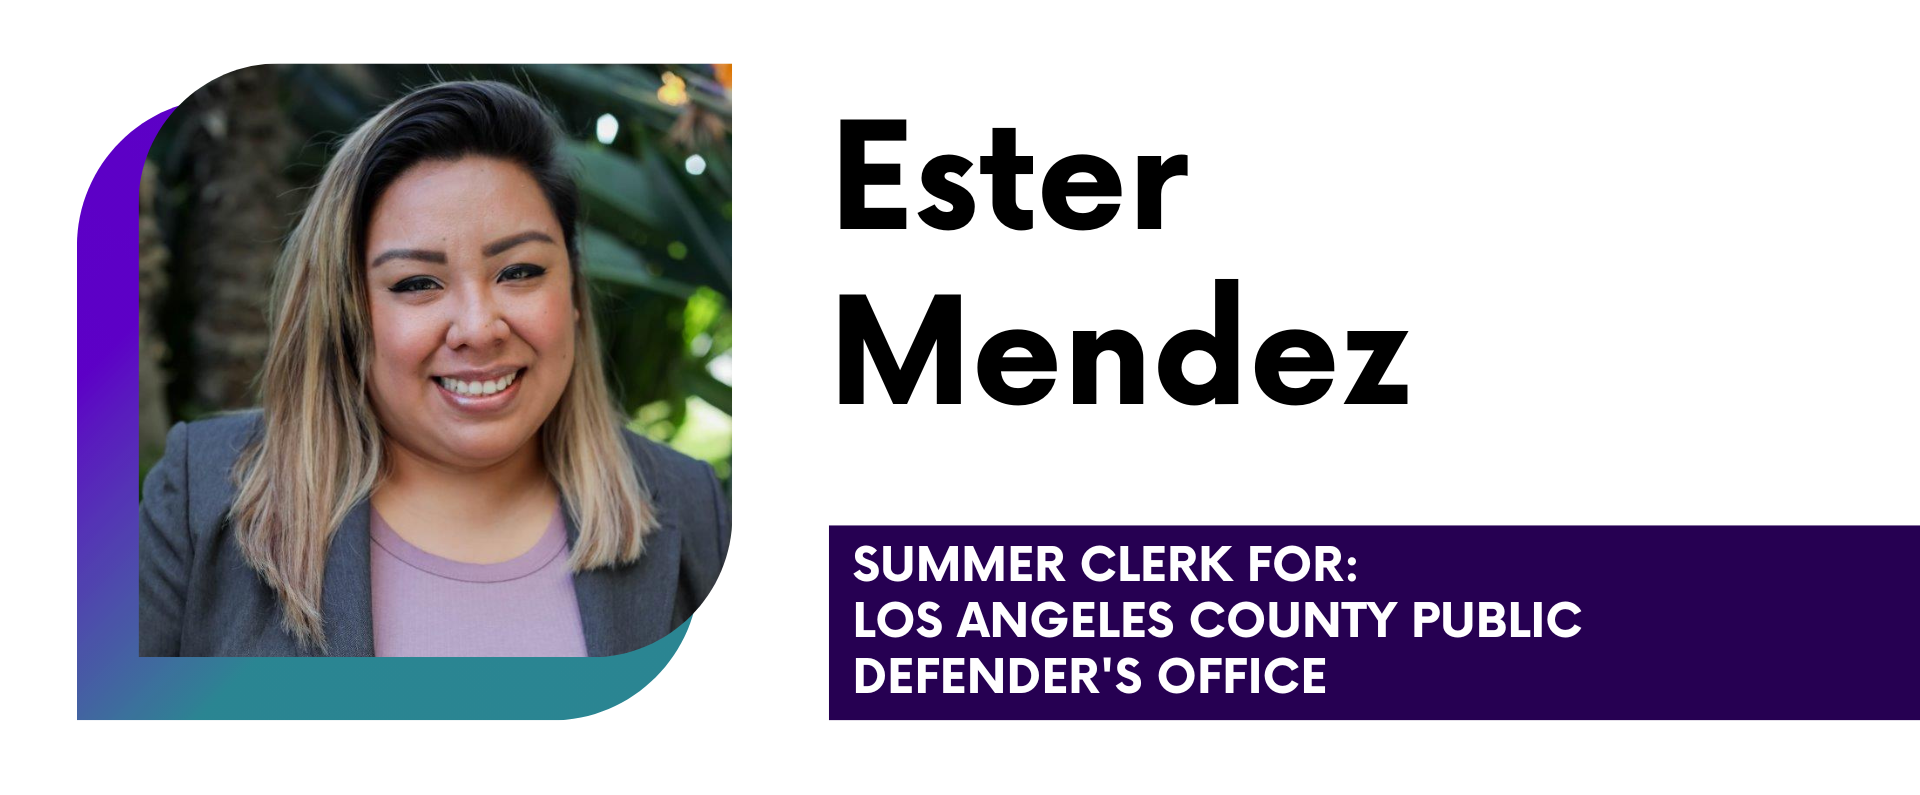 Ester Mendez Summer Clerk for: Los Angeles County Public Defender's Office